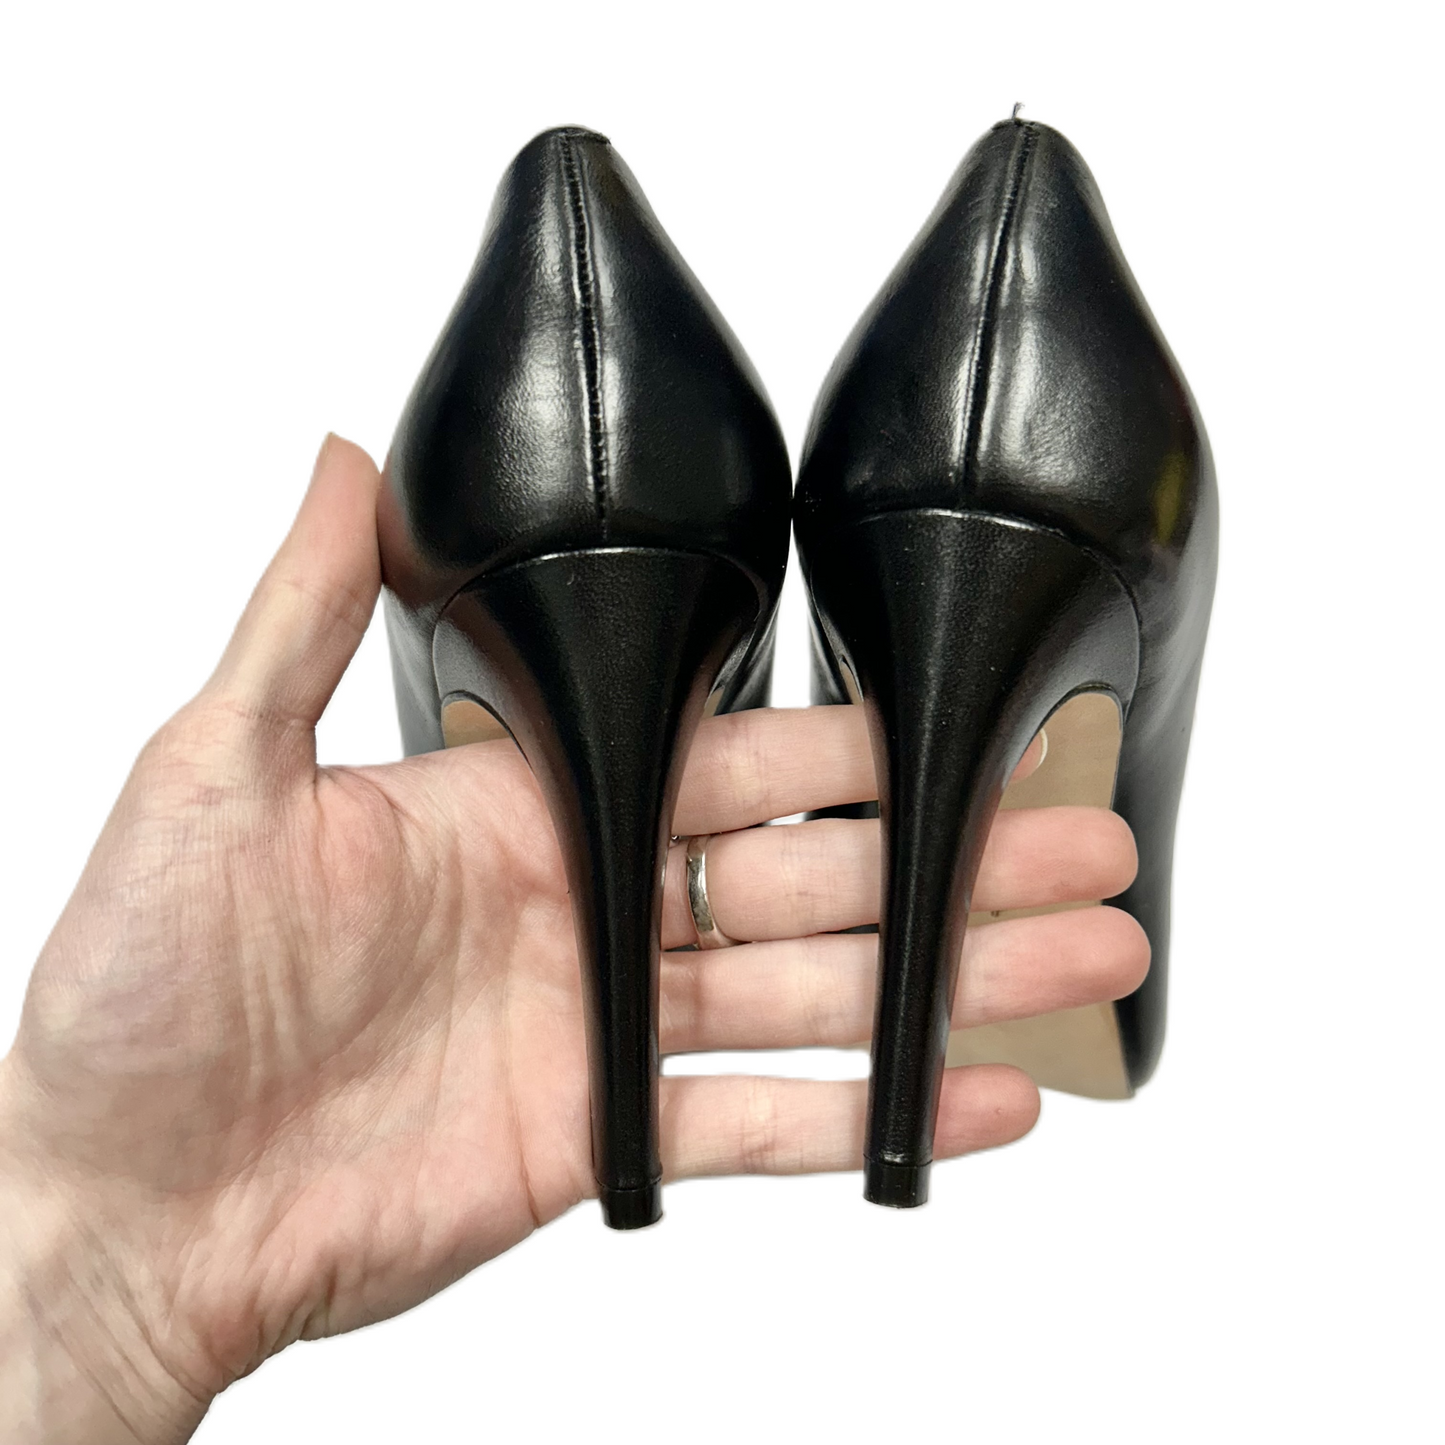 Sandals Heels Wedge By Cole-haan  Size: 7.5